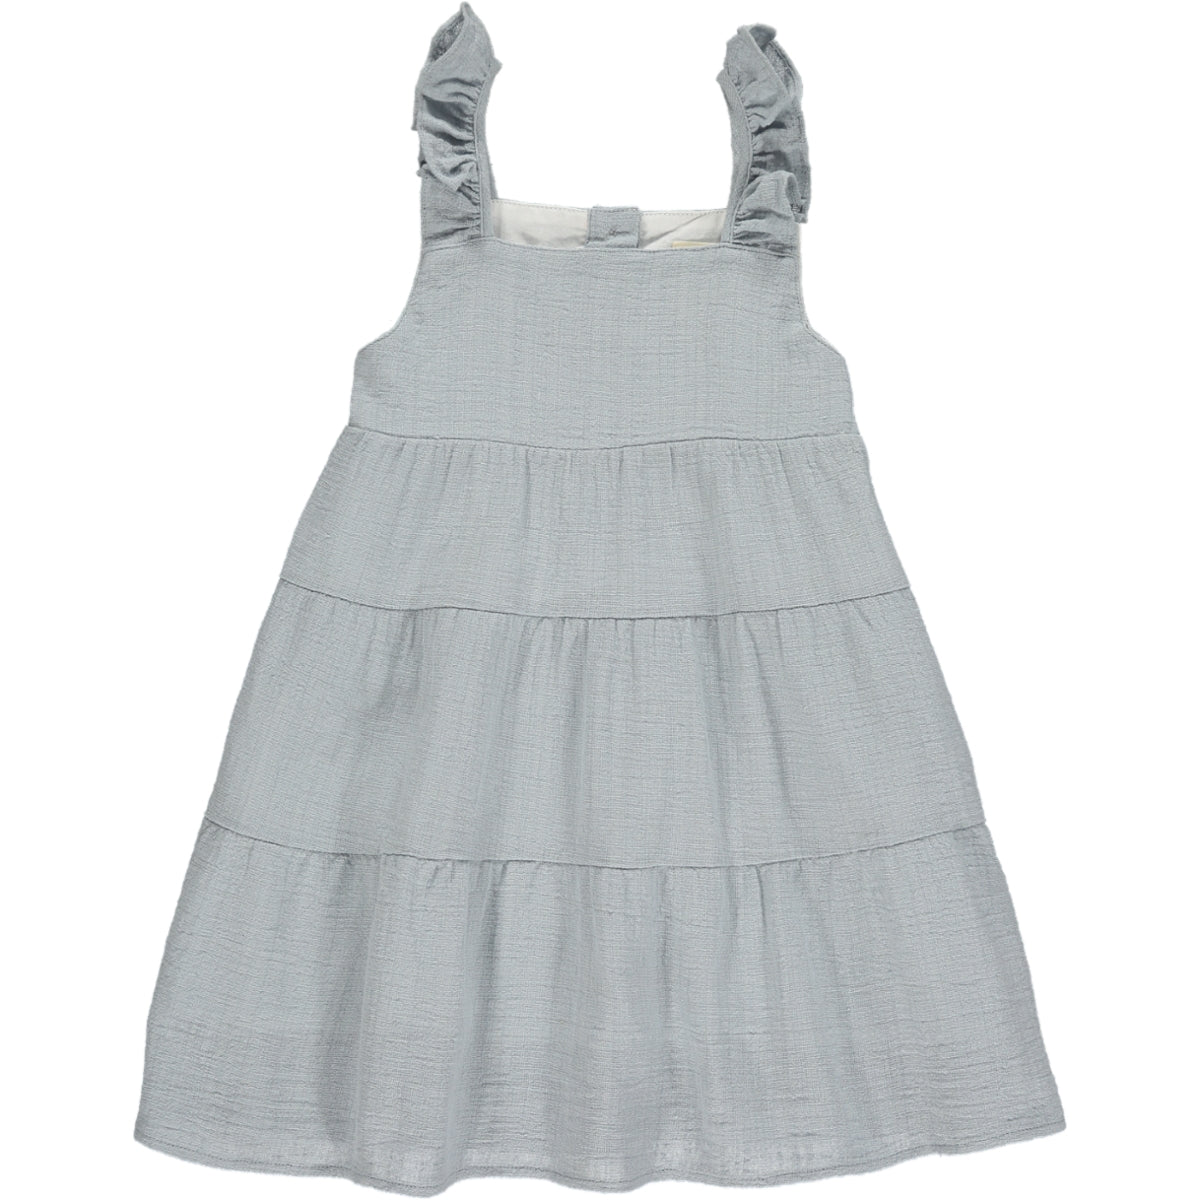 Layla Toddler Dress